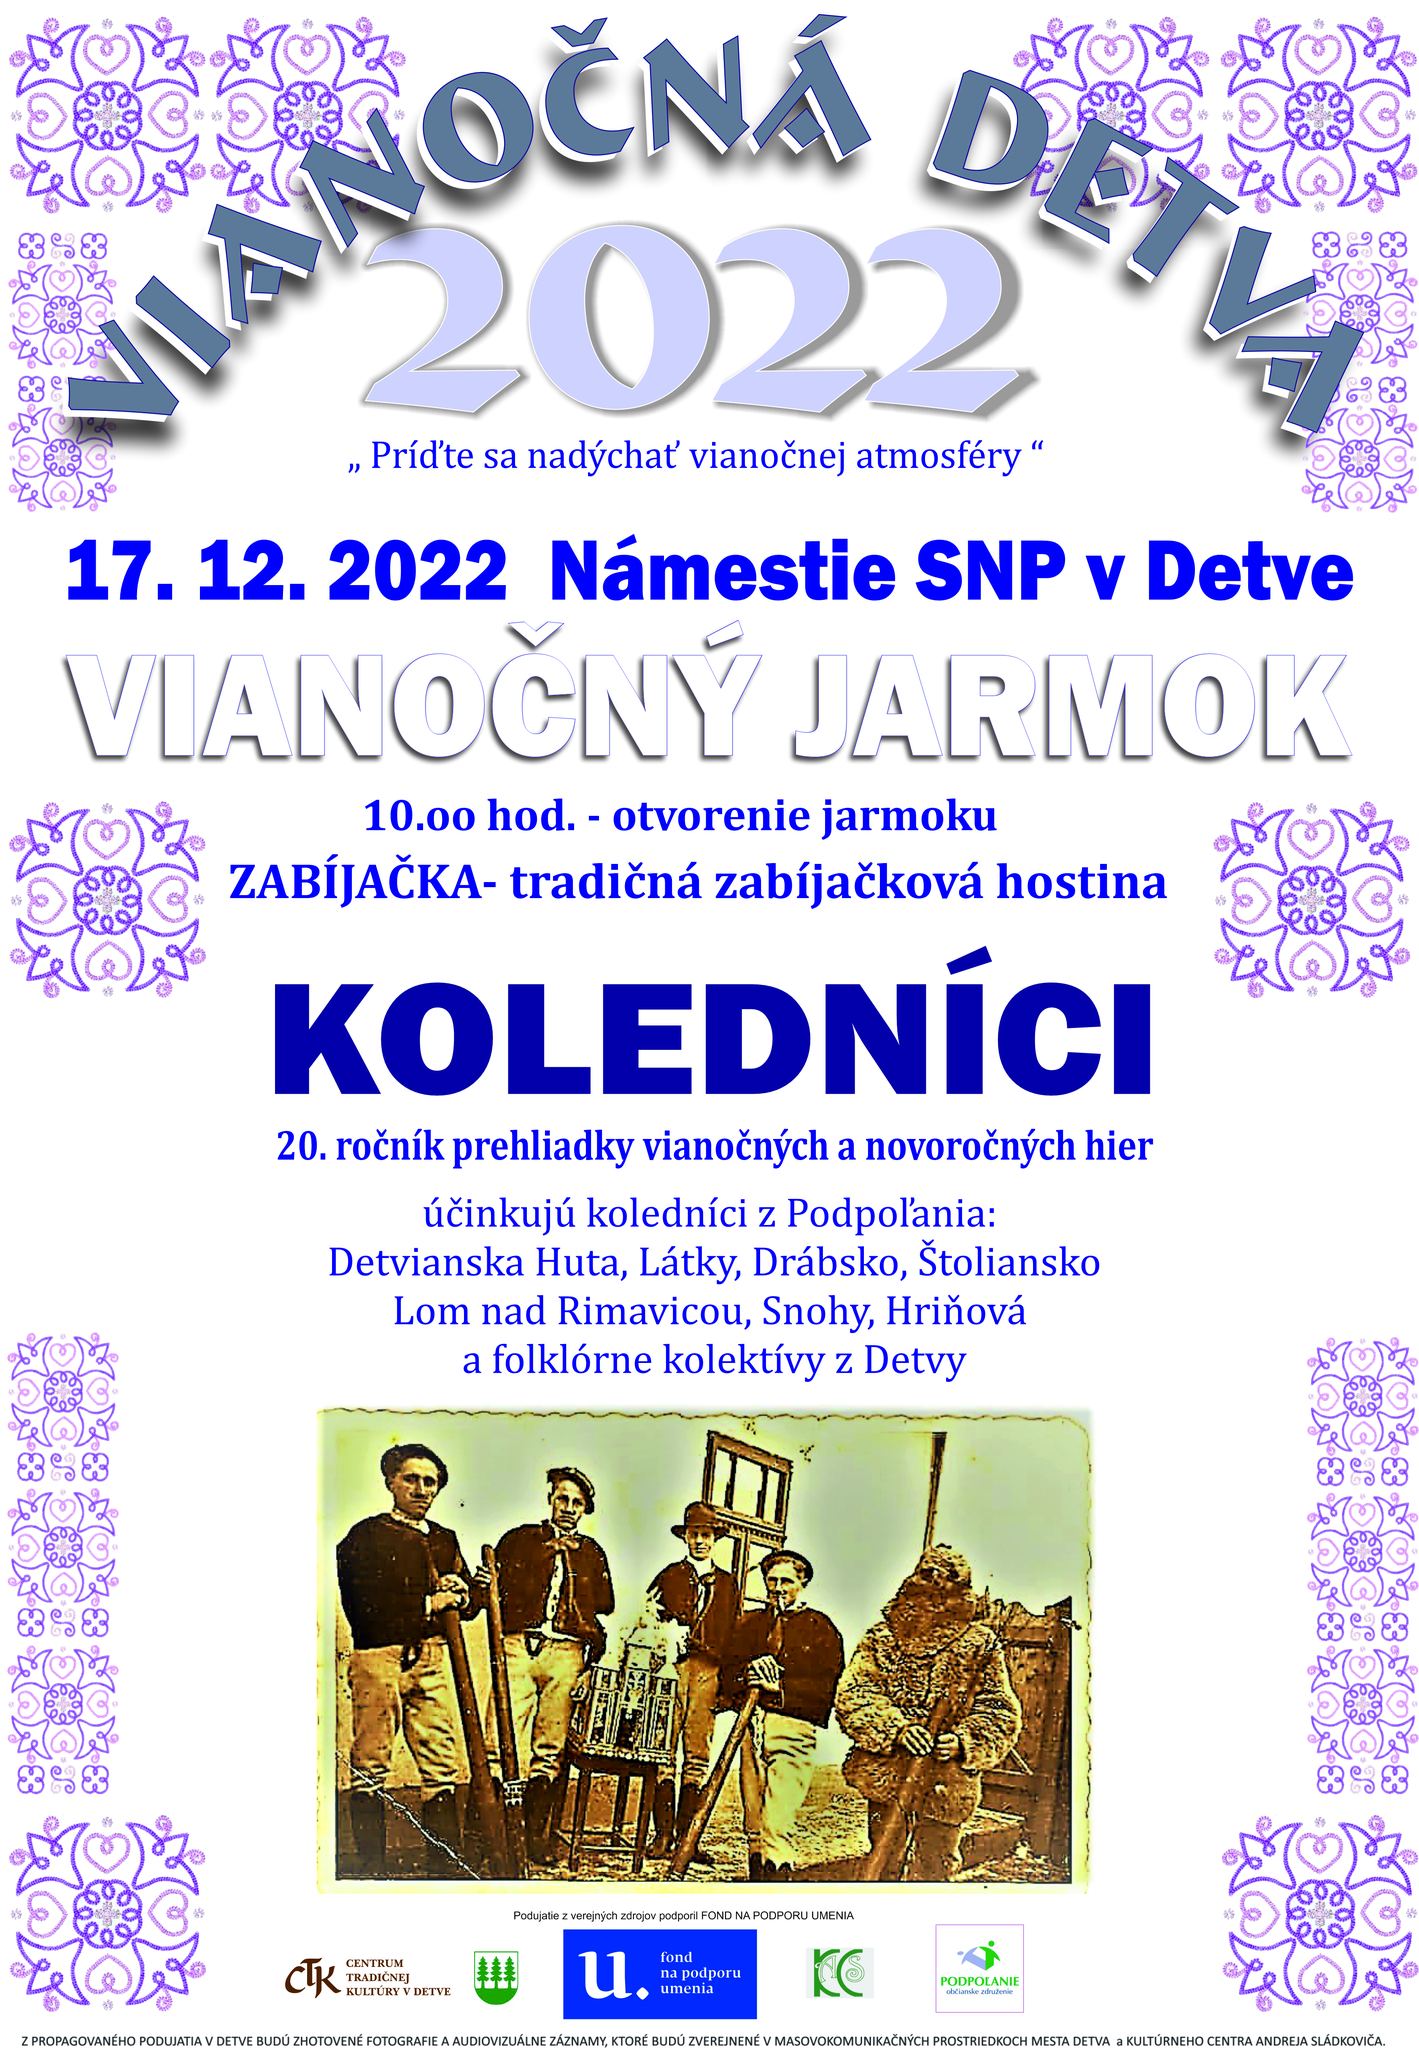 Kolednci 2022 Detva - 20. ronk a tradin zabjakov hostina